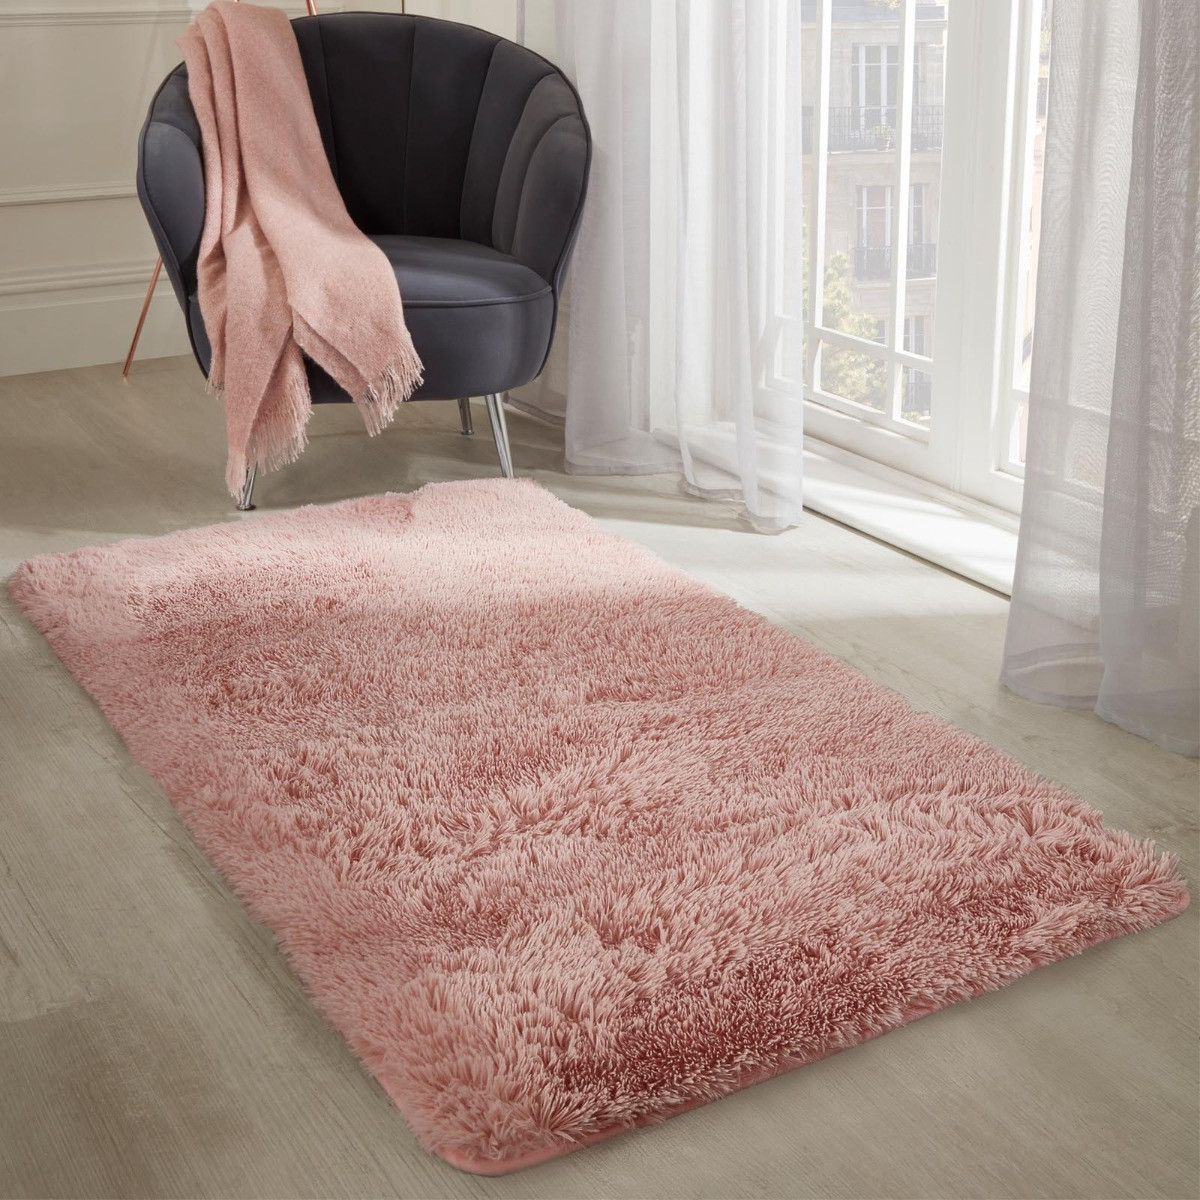 Sienna Soft Fluffy Rug Anti-Slip Plain Shaggy Floor Mat, Blush Pink - 80 x 150cm>